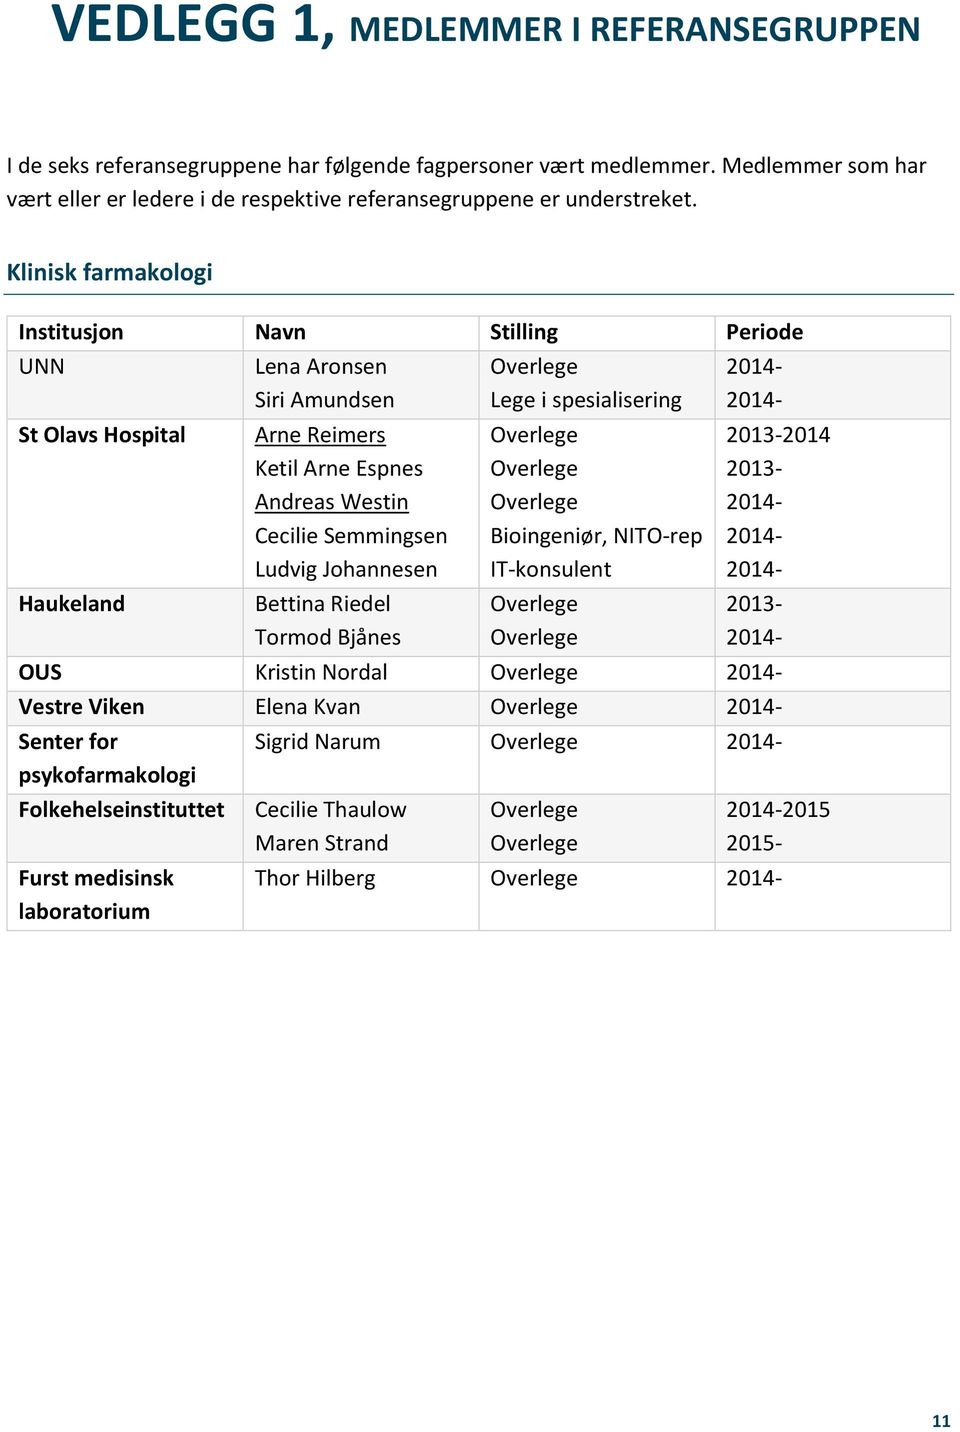 Bettina Riedel Tormod Bjånes Overlege Lege i spesialisering Overlege Overlege Overlege Bioingeniør, NITO-rep IT-konsulent Overlege Overlege 2014-2014- 2013-2014 2013-2014- 2014-2014- 2013-2014- OUS